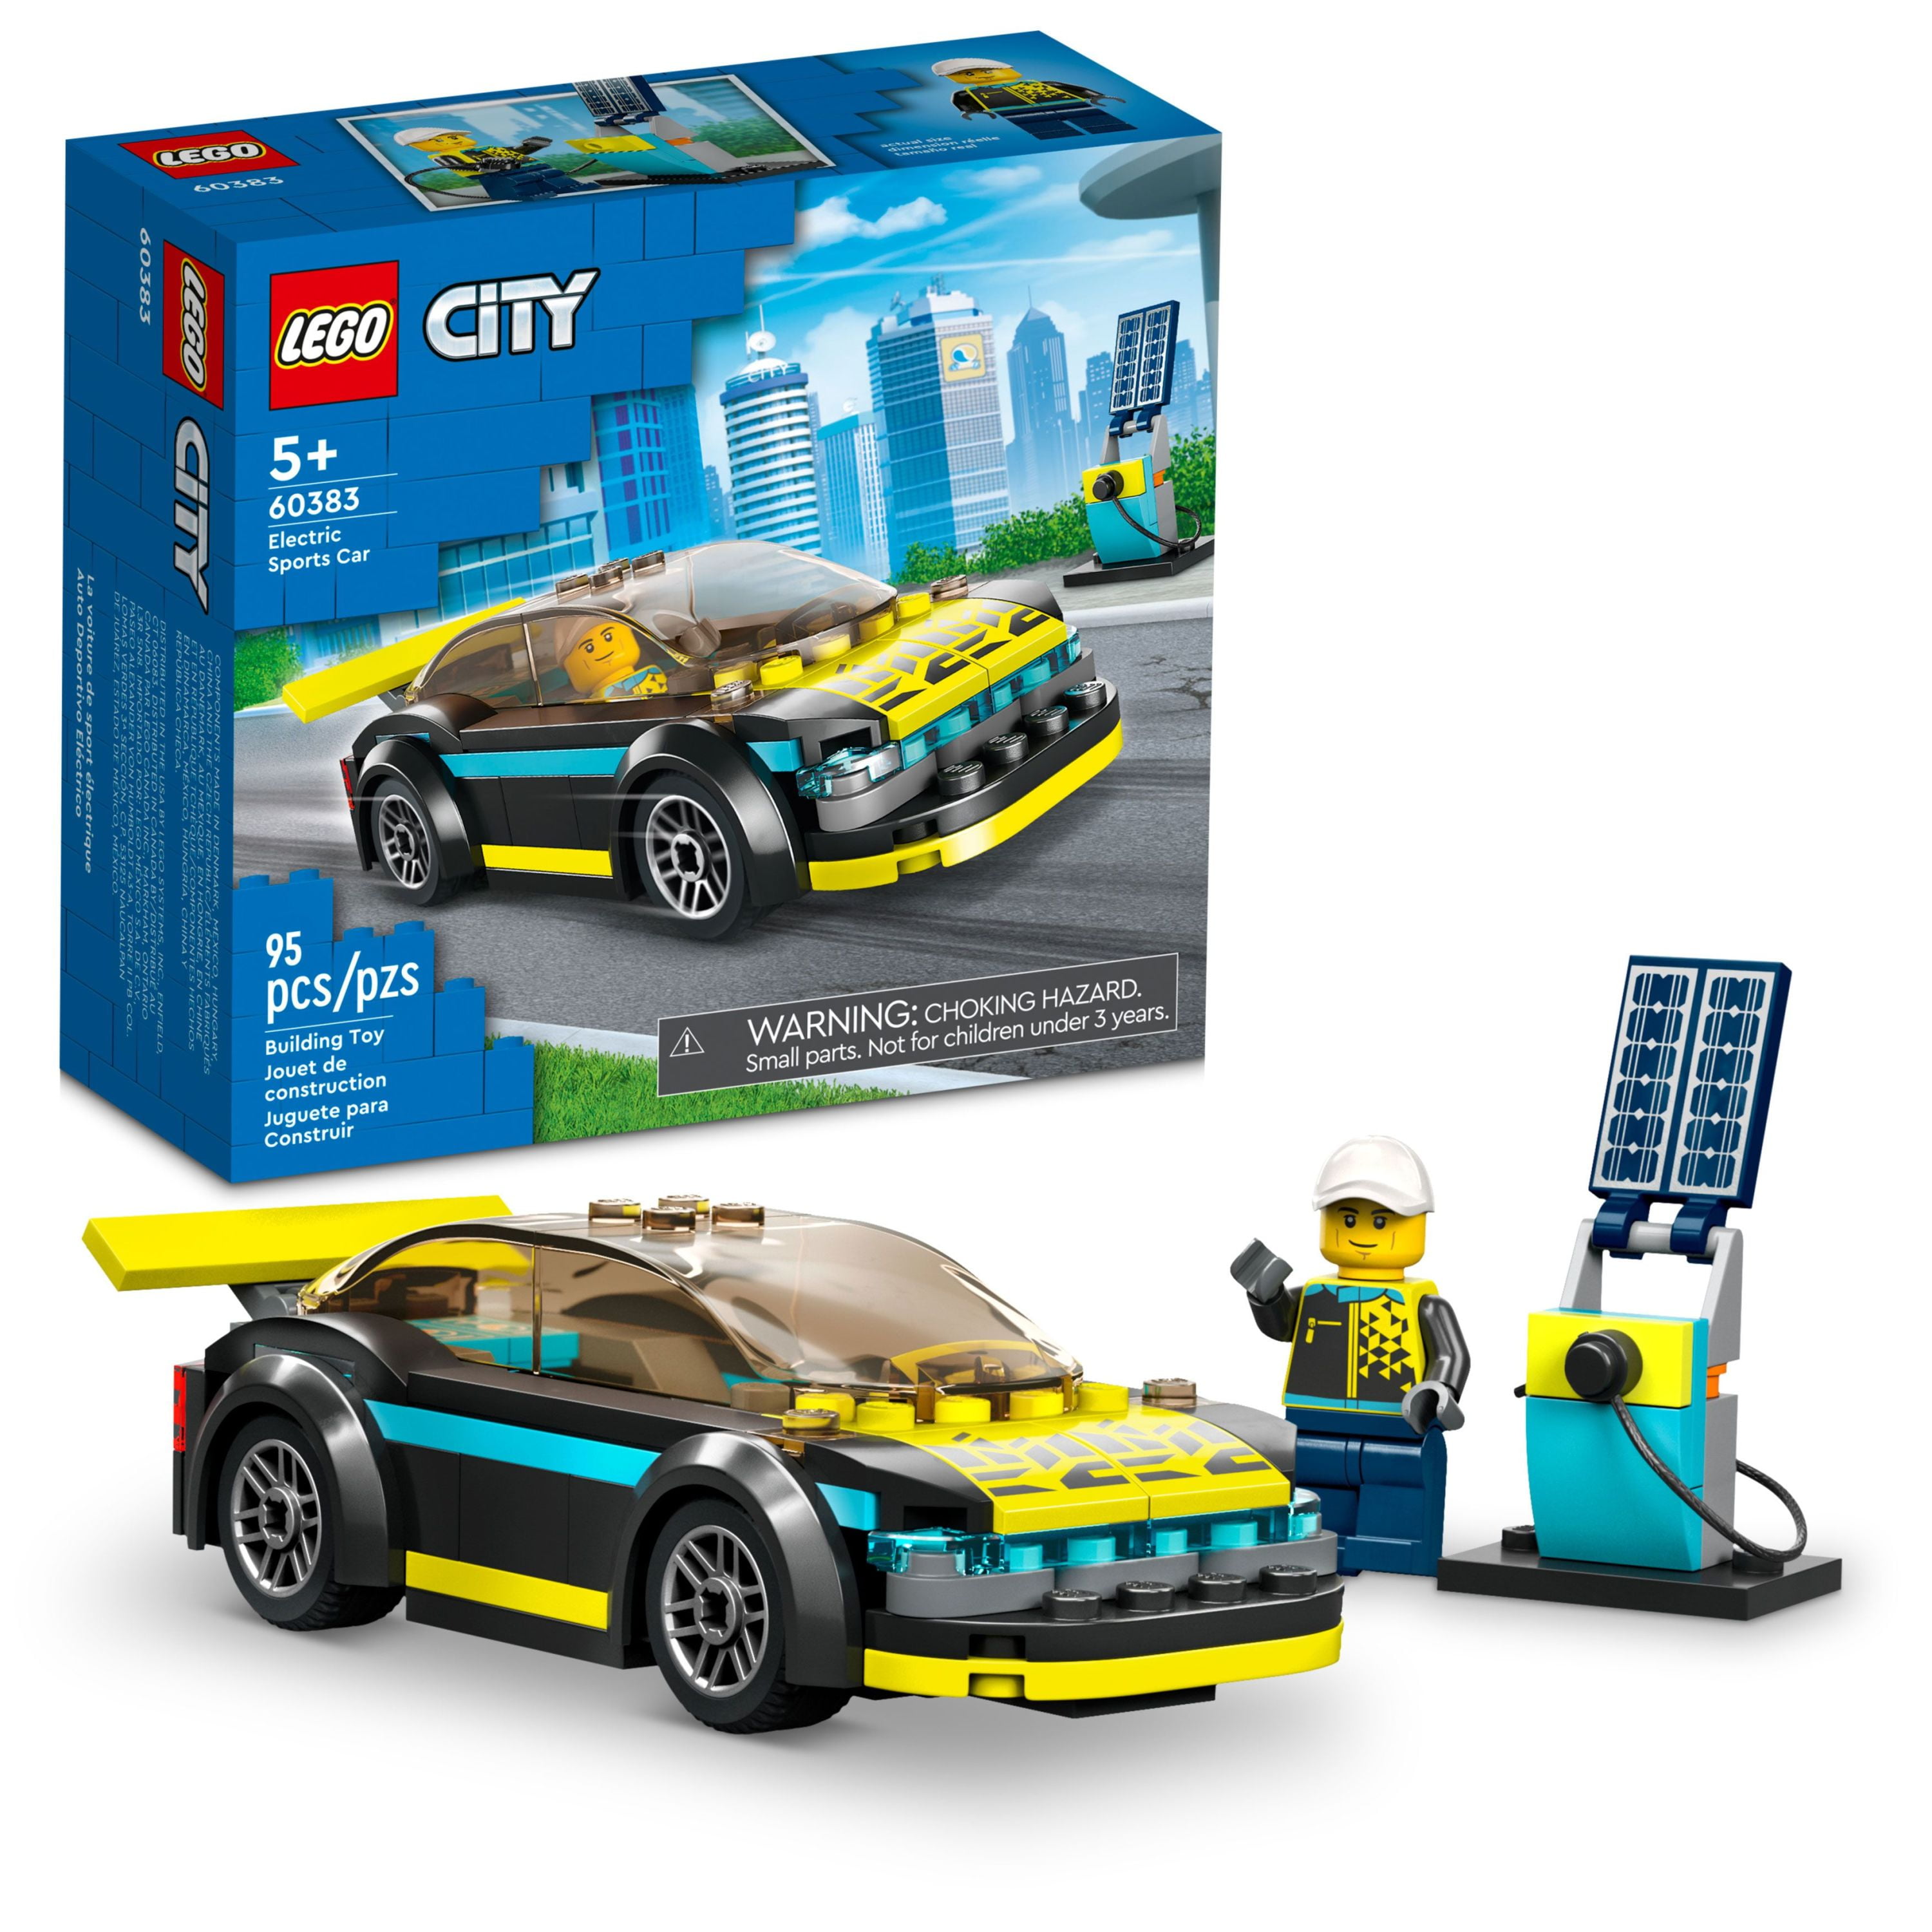 Electric Sports Car 60383, City